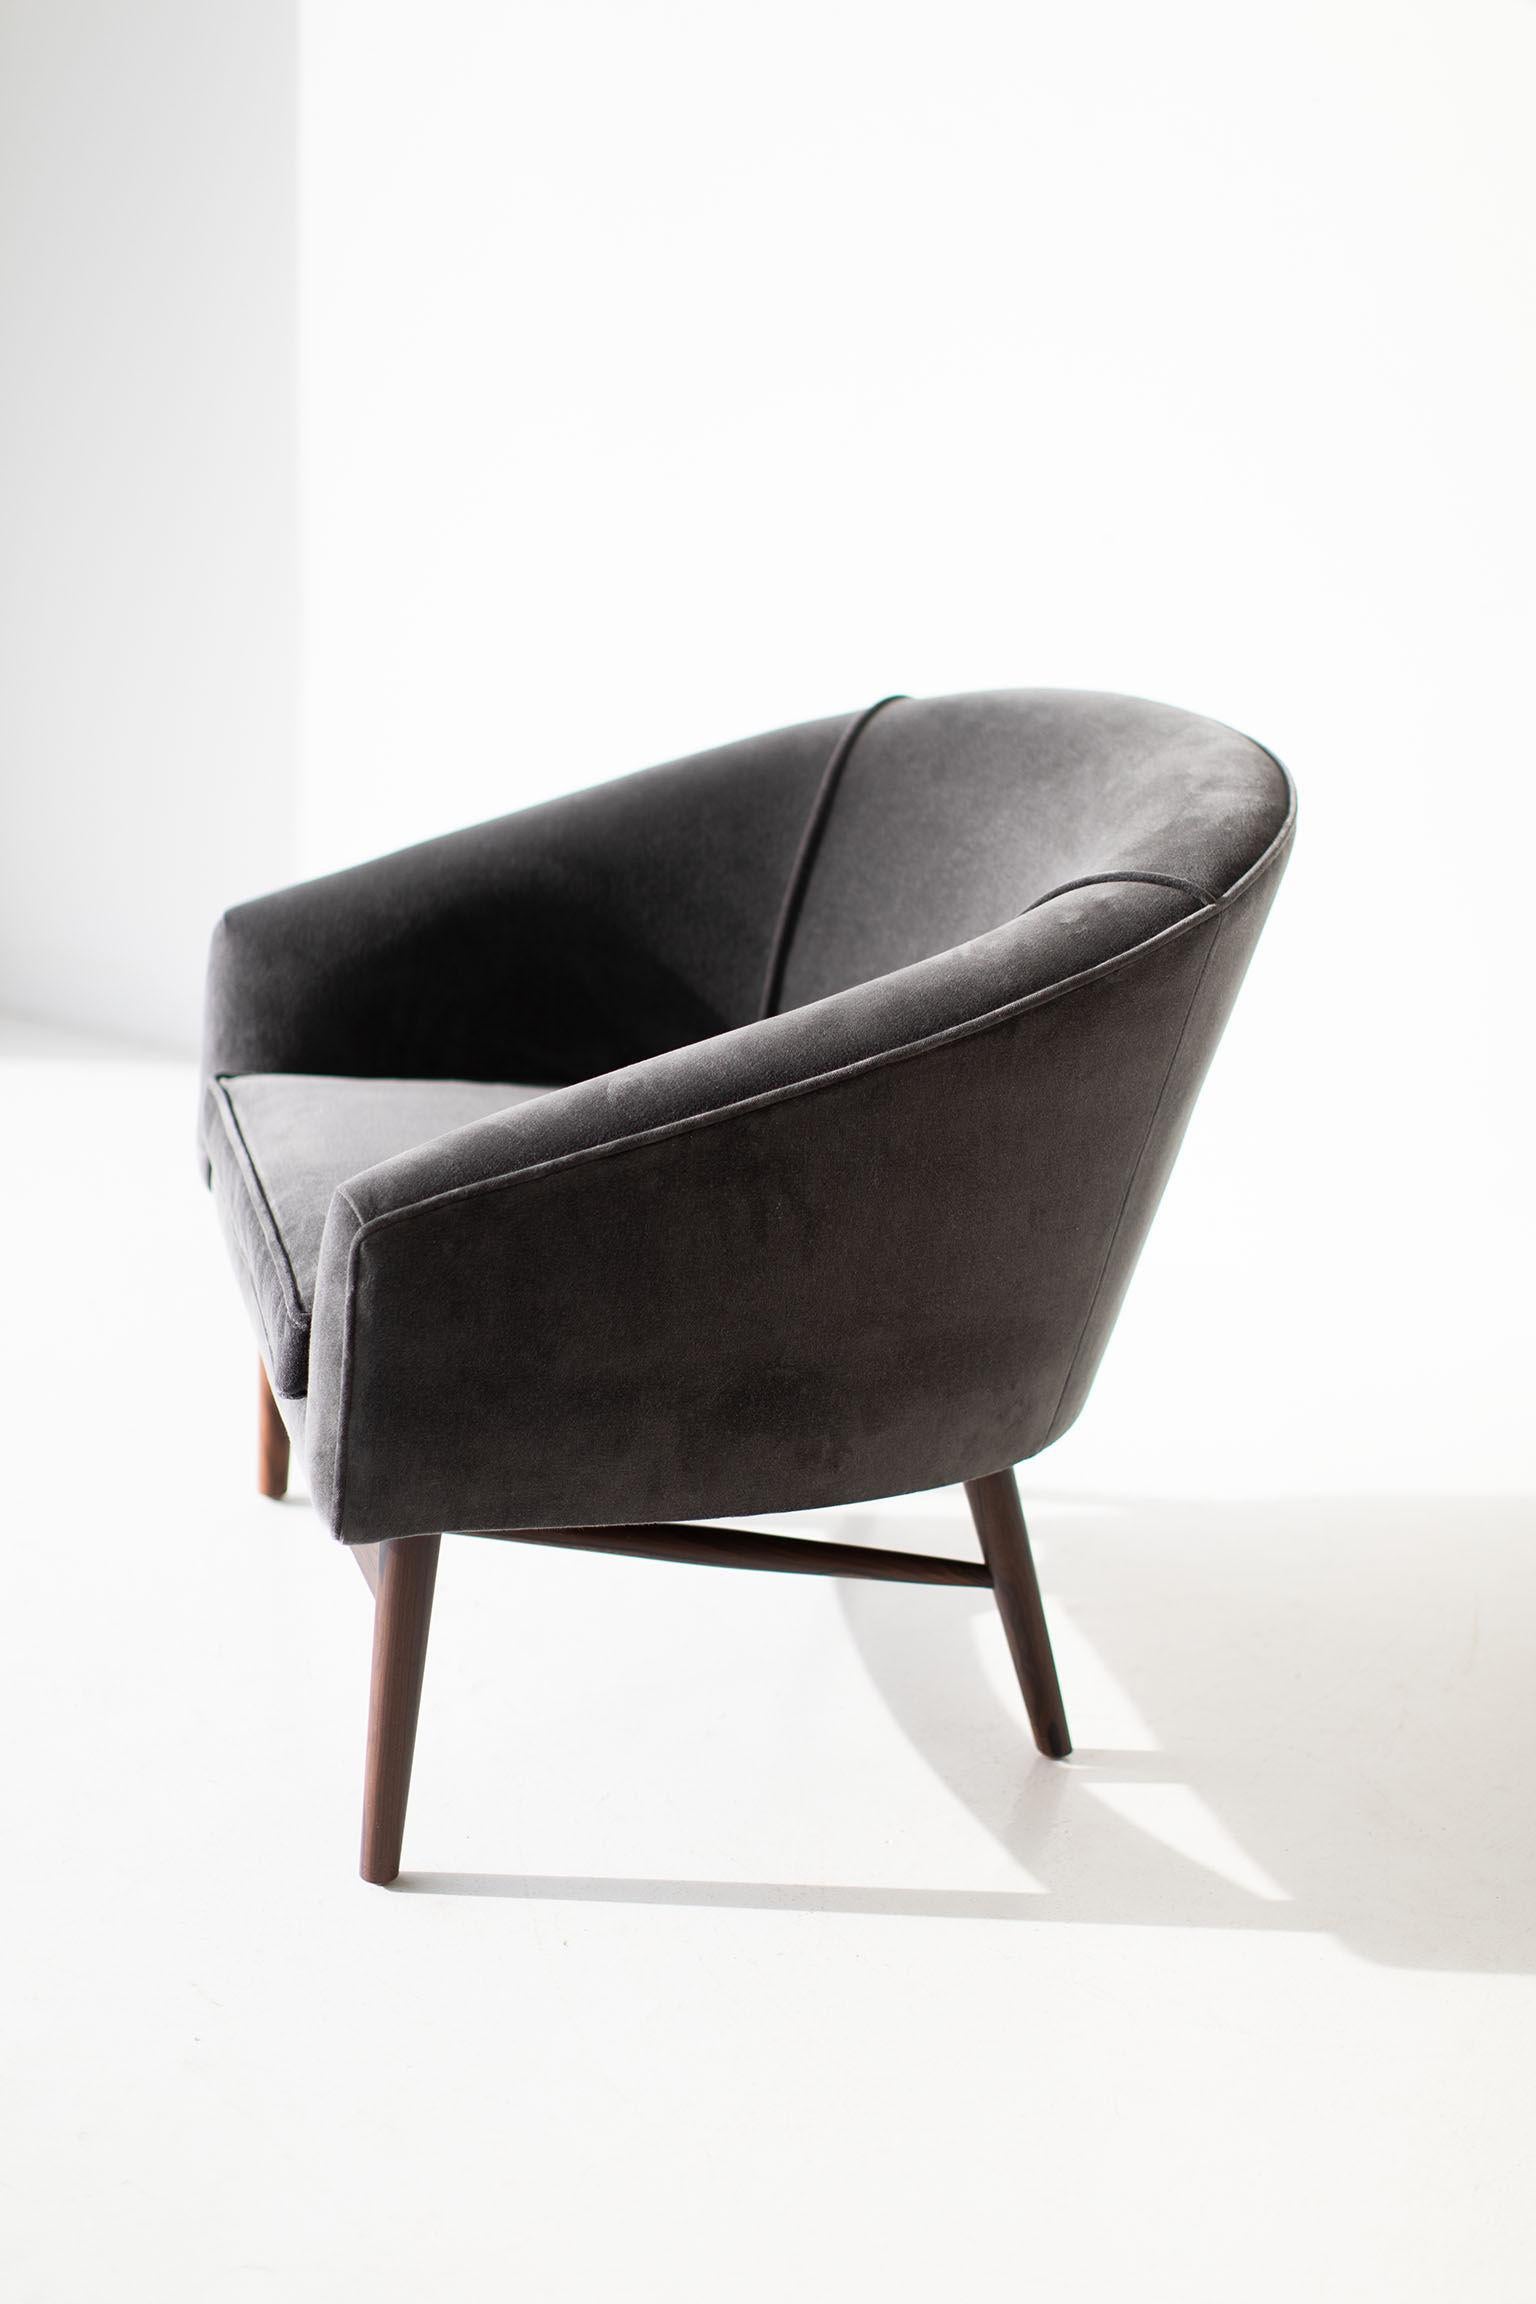 Velvet Lawrence Peabody Lounge Chair for Craft Associates For Sale